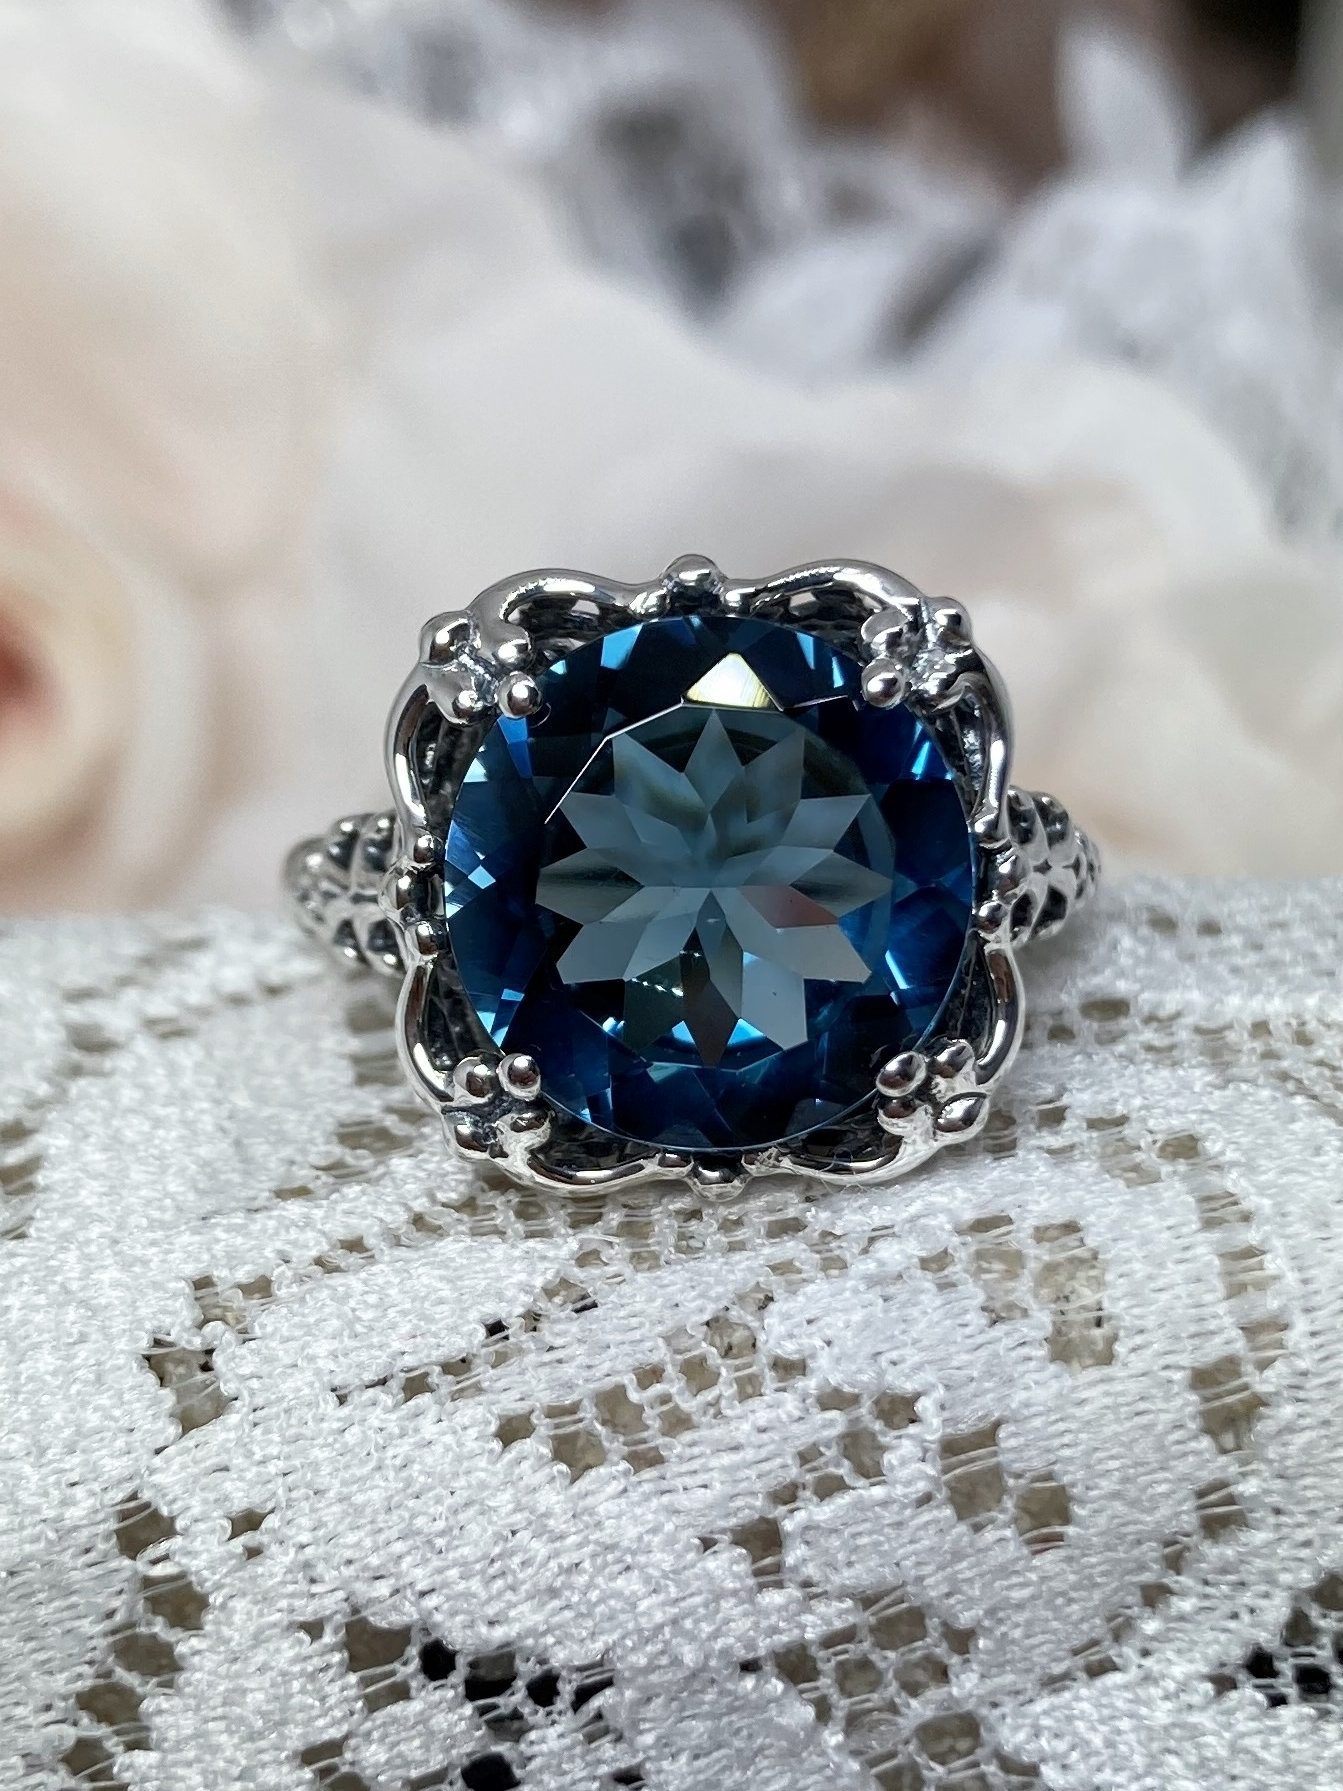 New Luxury Girl Jewelry Gifts Blue Topaz Gemstone Silver Women